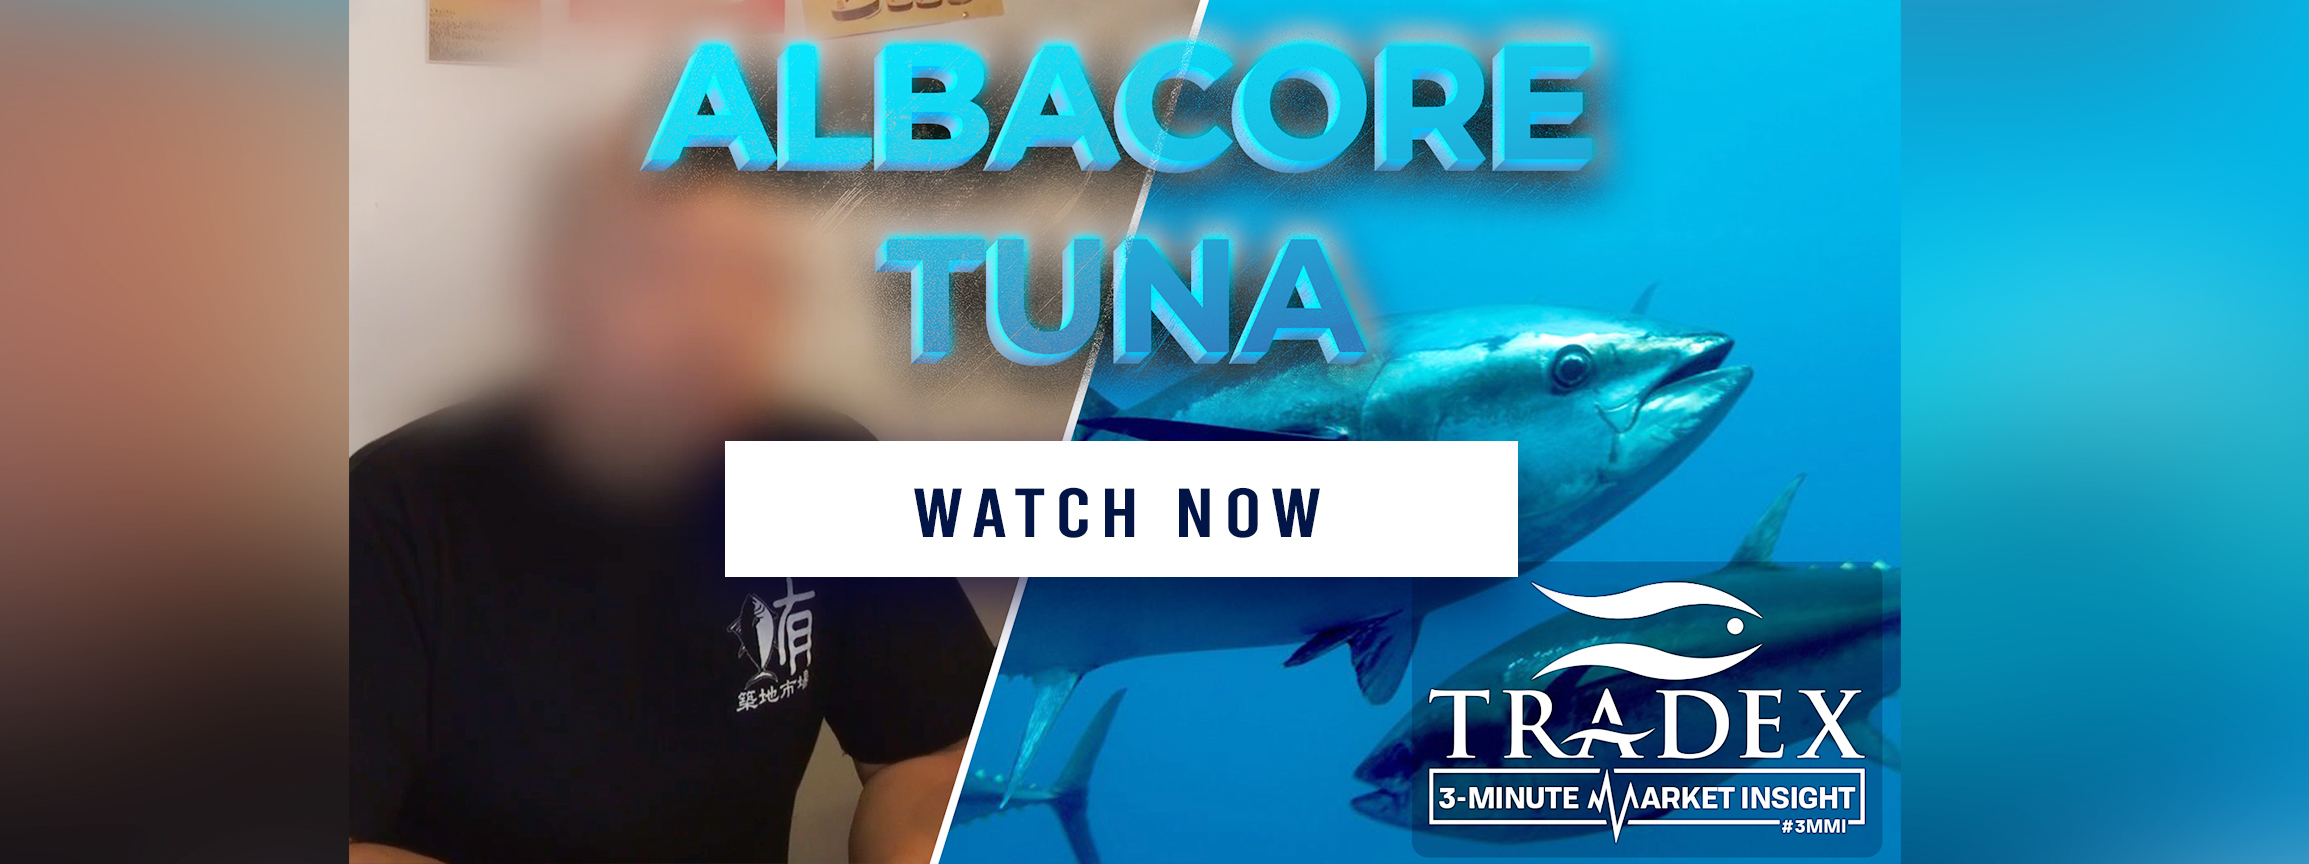 Albacore Tuna - Watch Now!